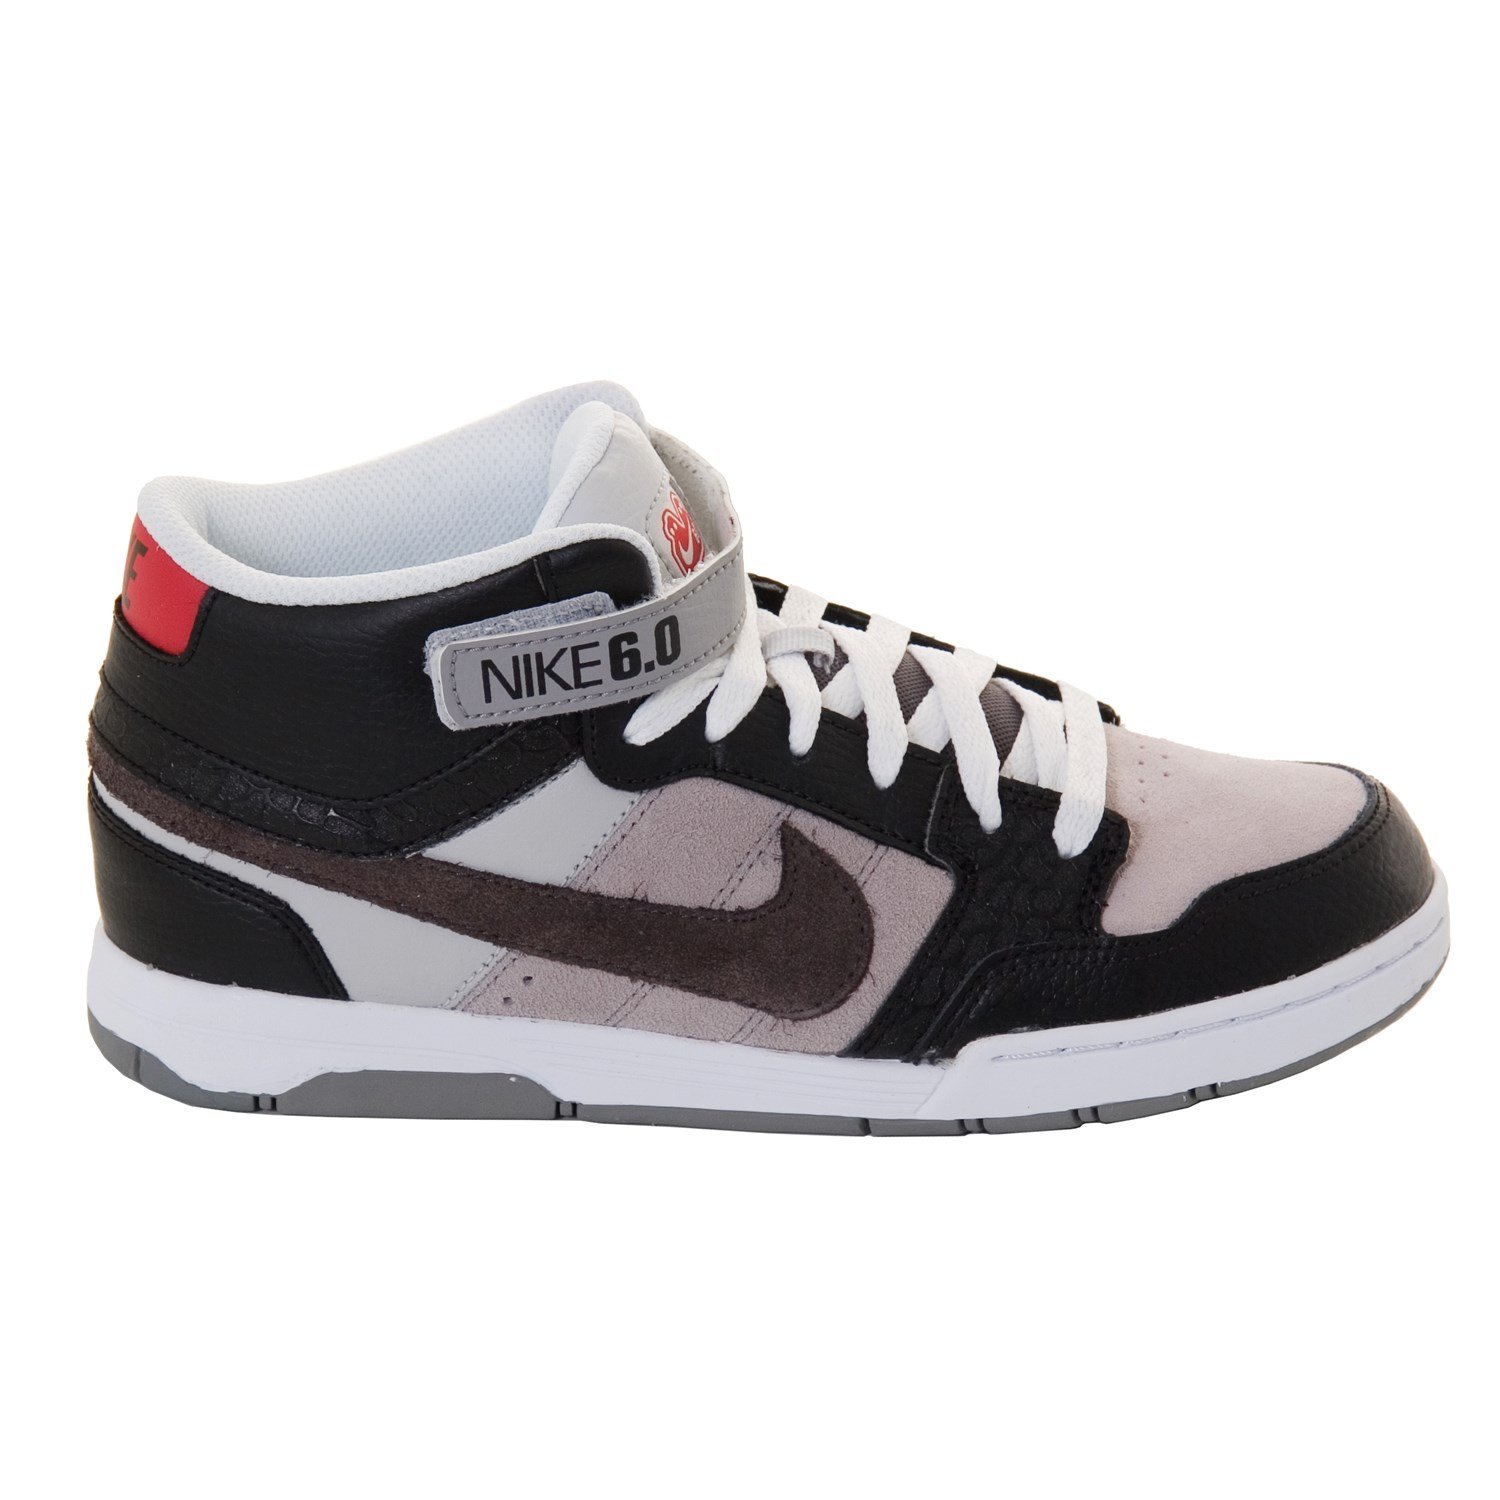 Inspección James Dyson sentido Nike 6.0 Mogan Mid Jr Shoes - Youth | evo